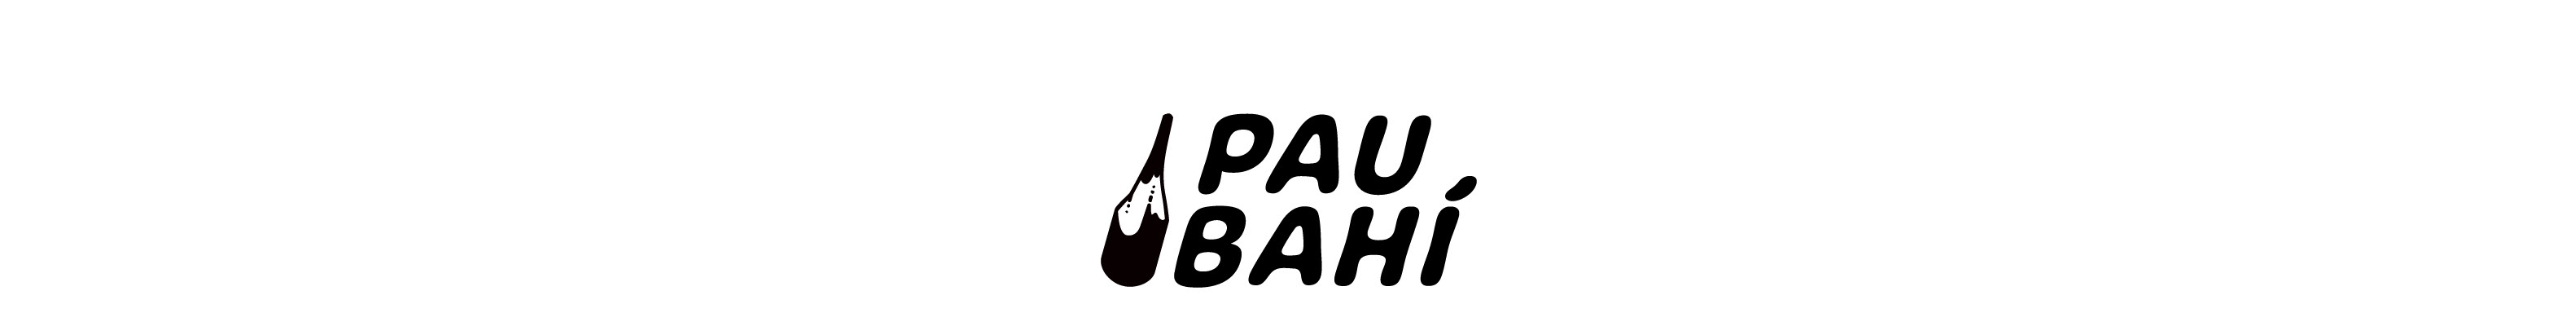 Banner de perfil de Pau Bahí Segura